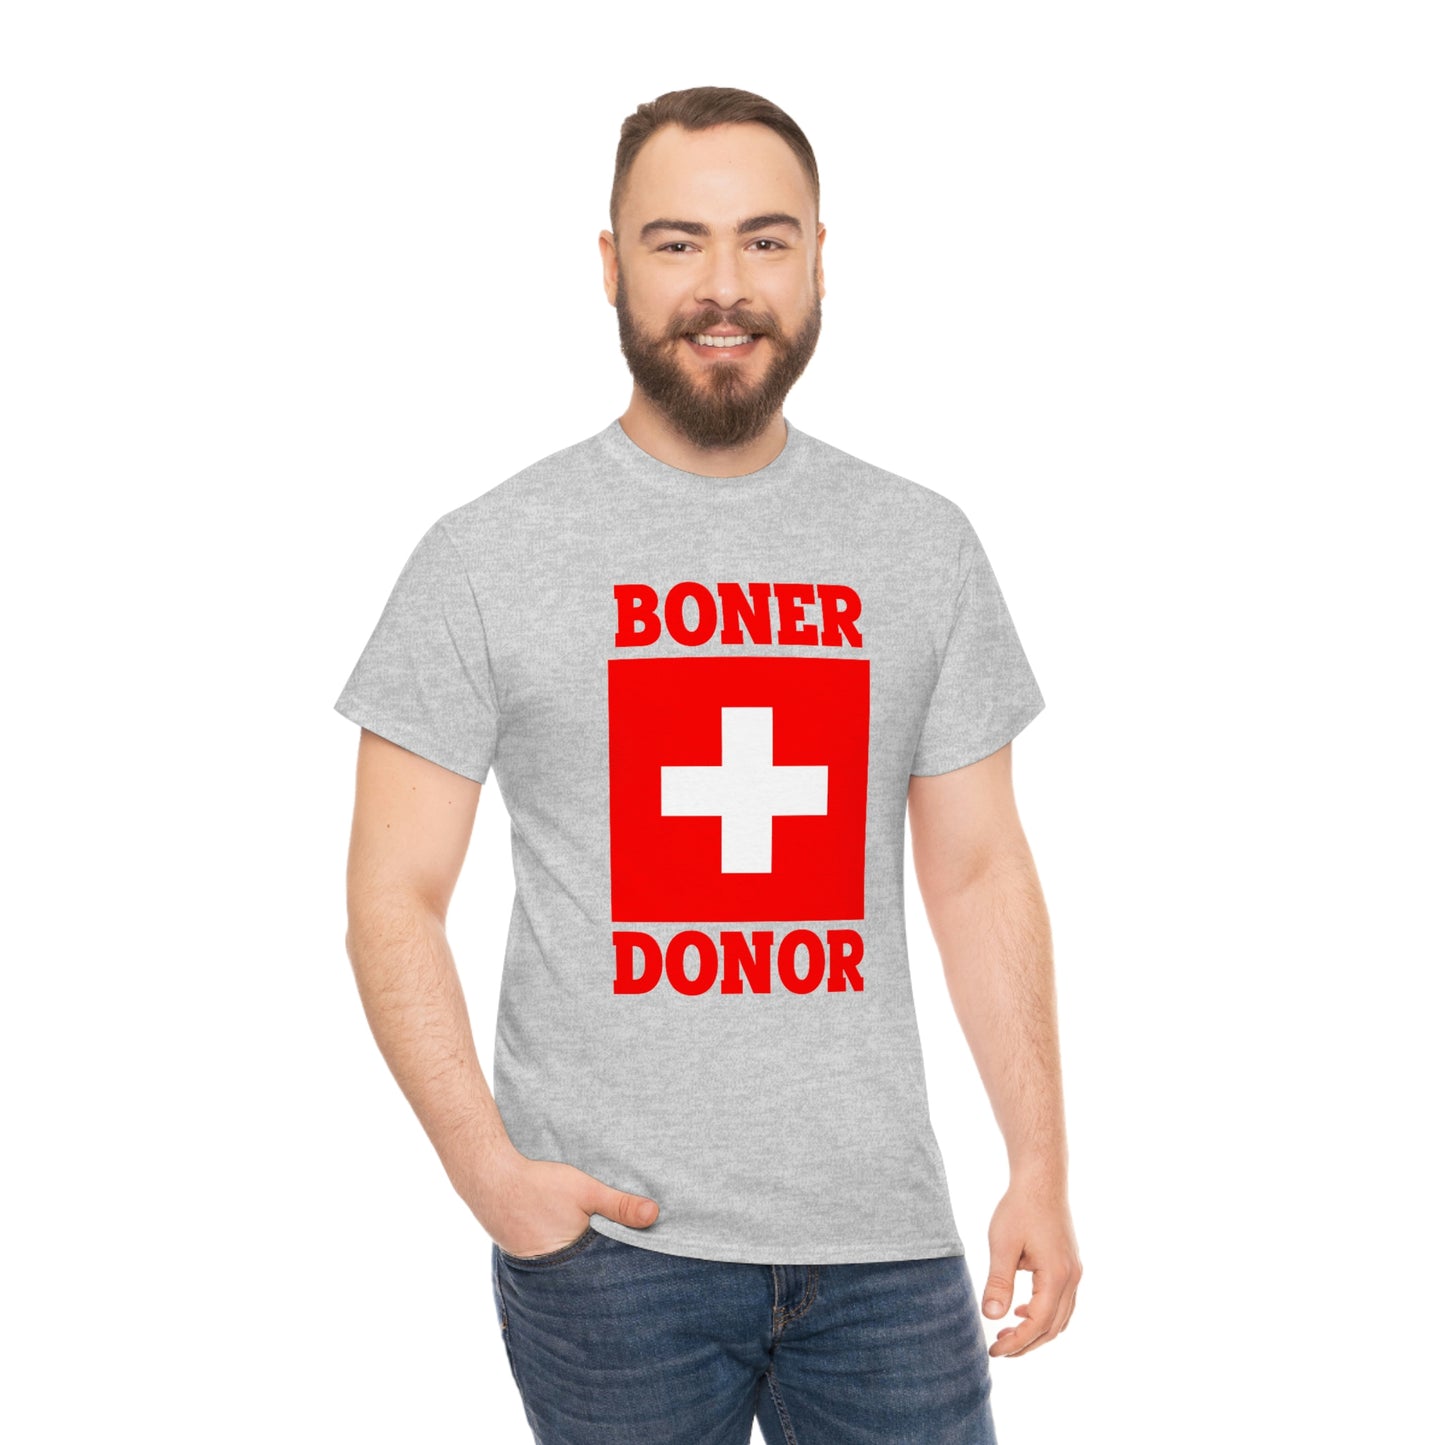 BONER DONOR T-SHIRT